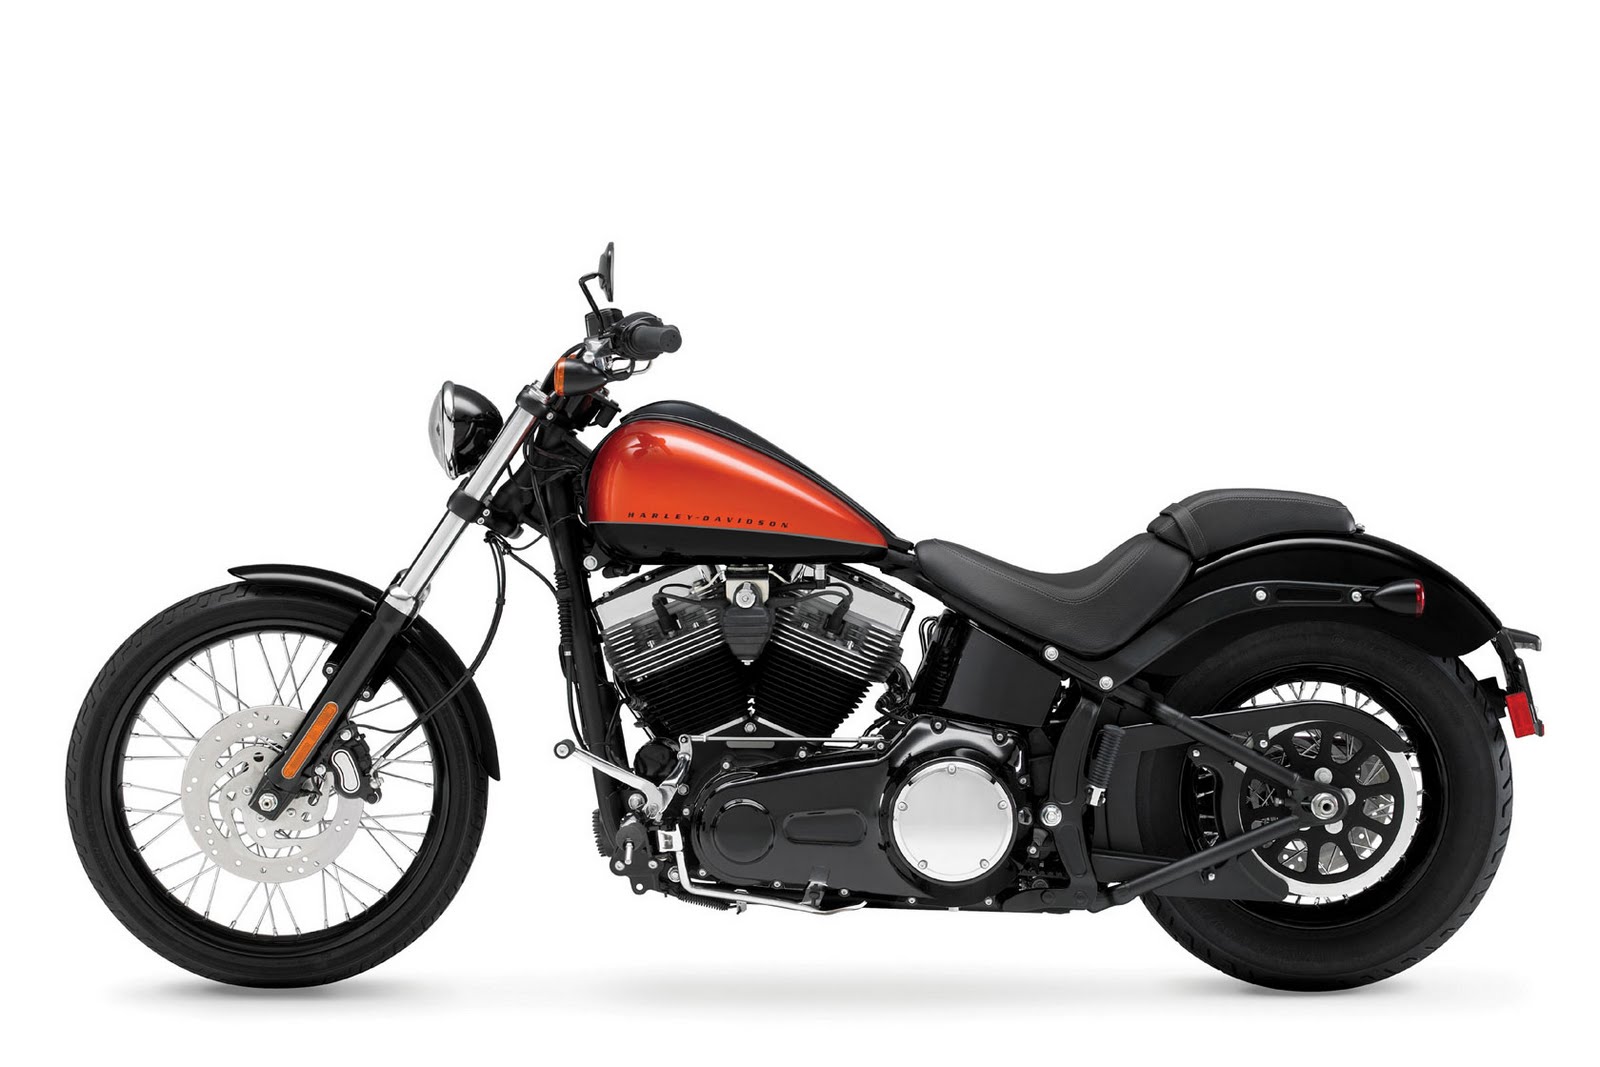 Harley Davidson Bikes HD Wallpaper